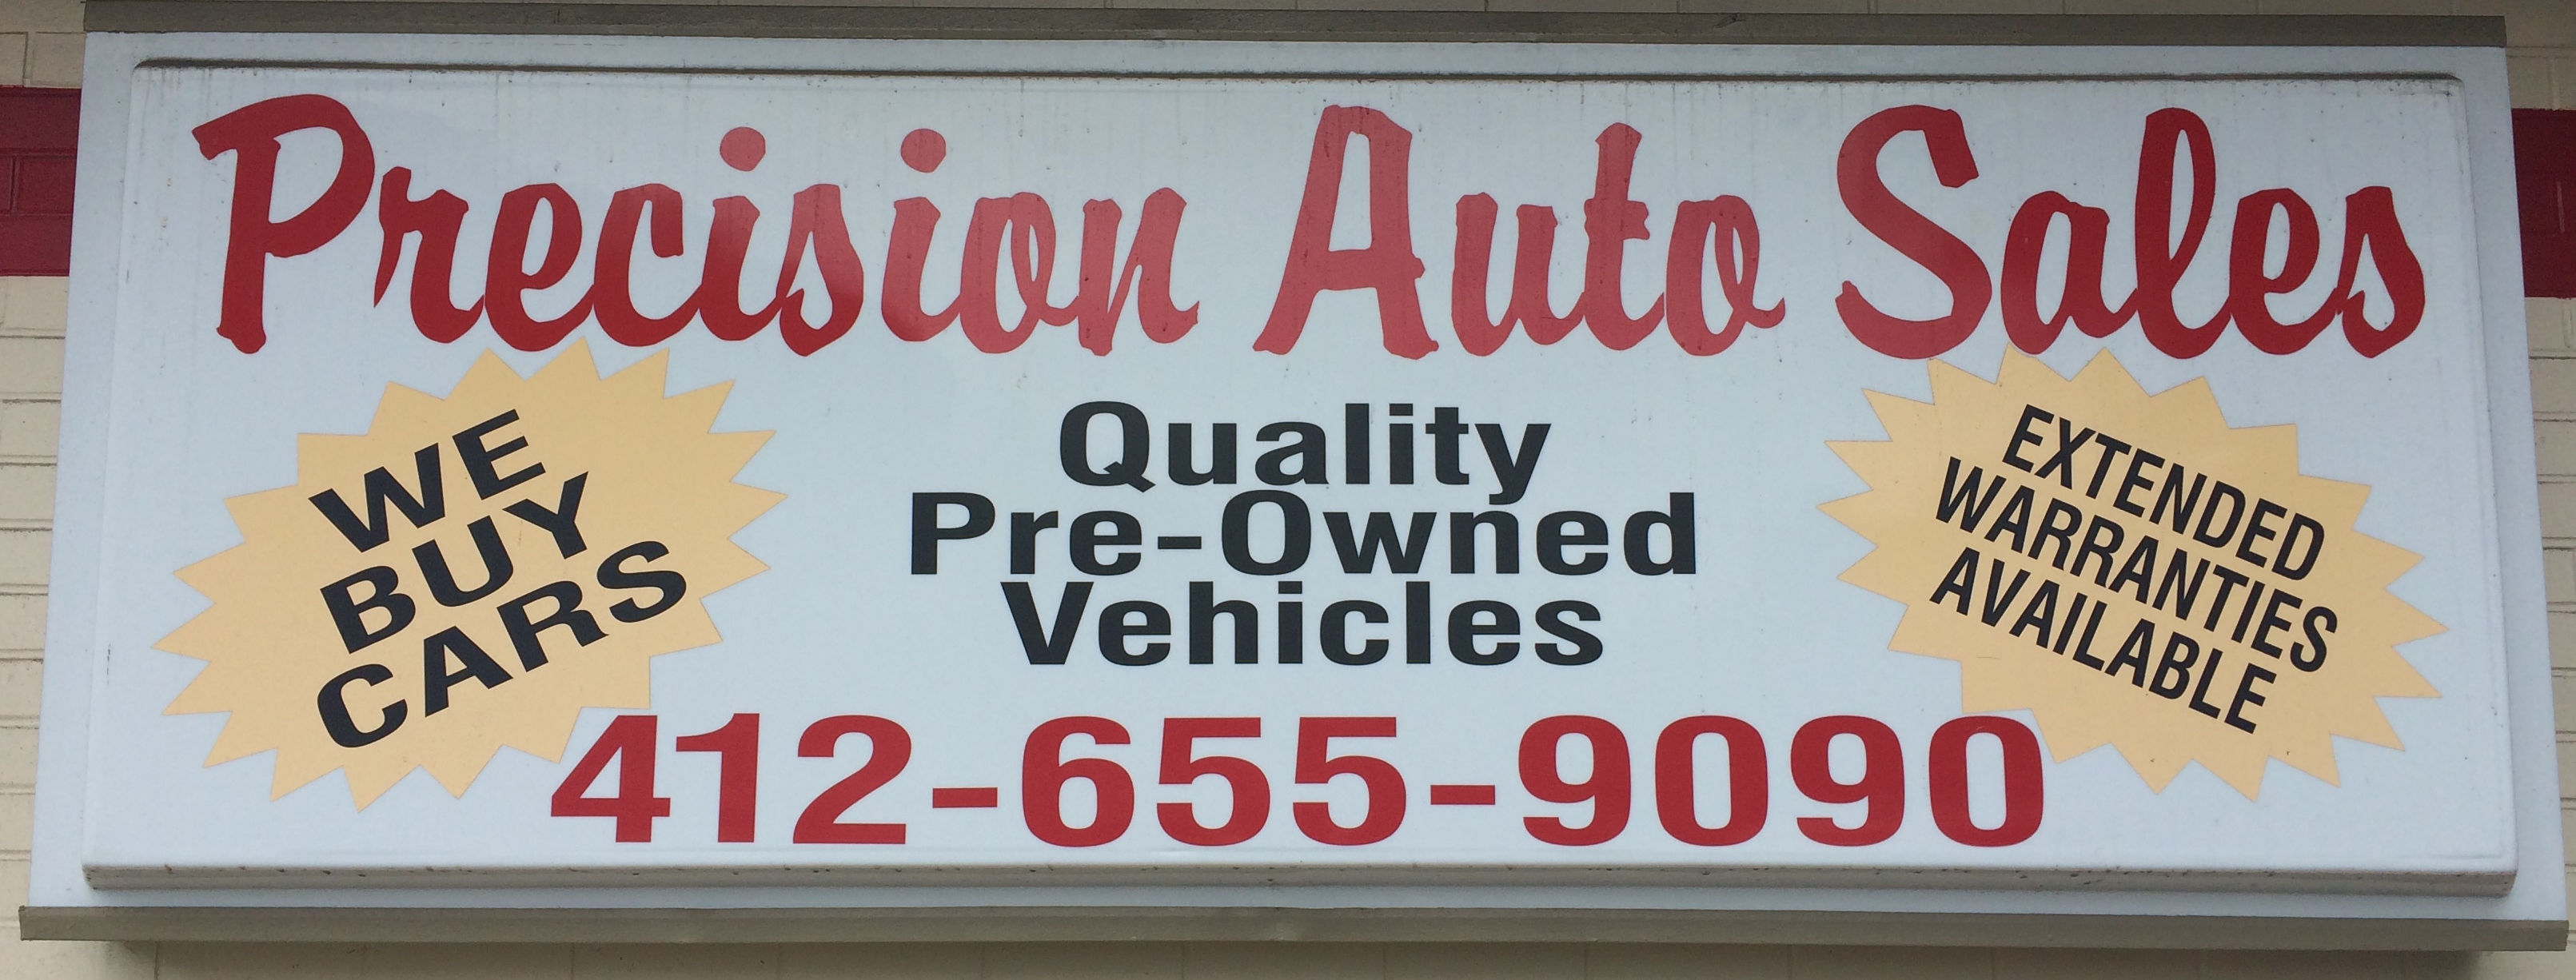 Precision Auto Sales Pleasant Hills Pa Cars Com